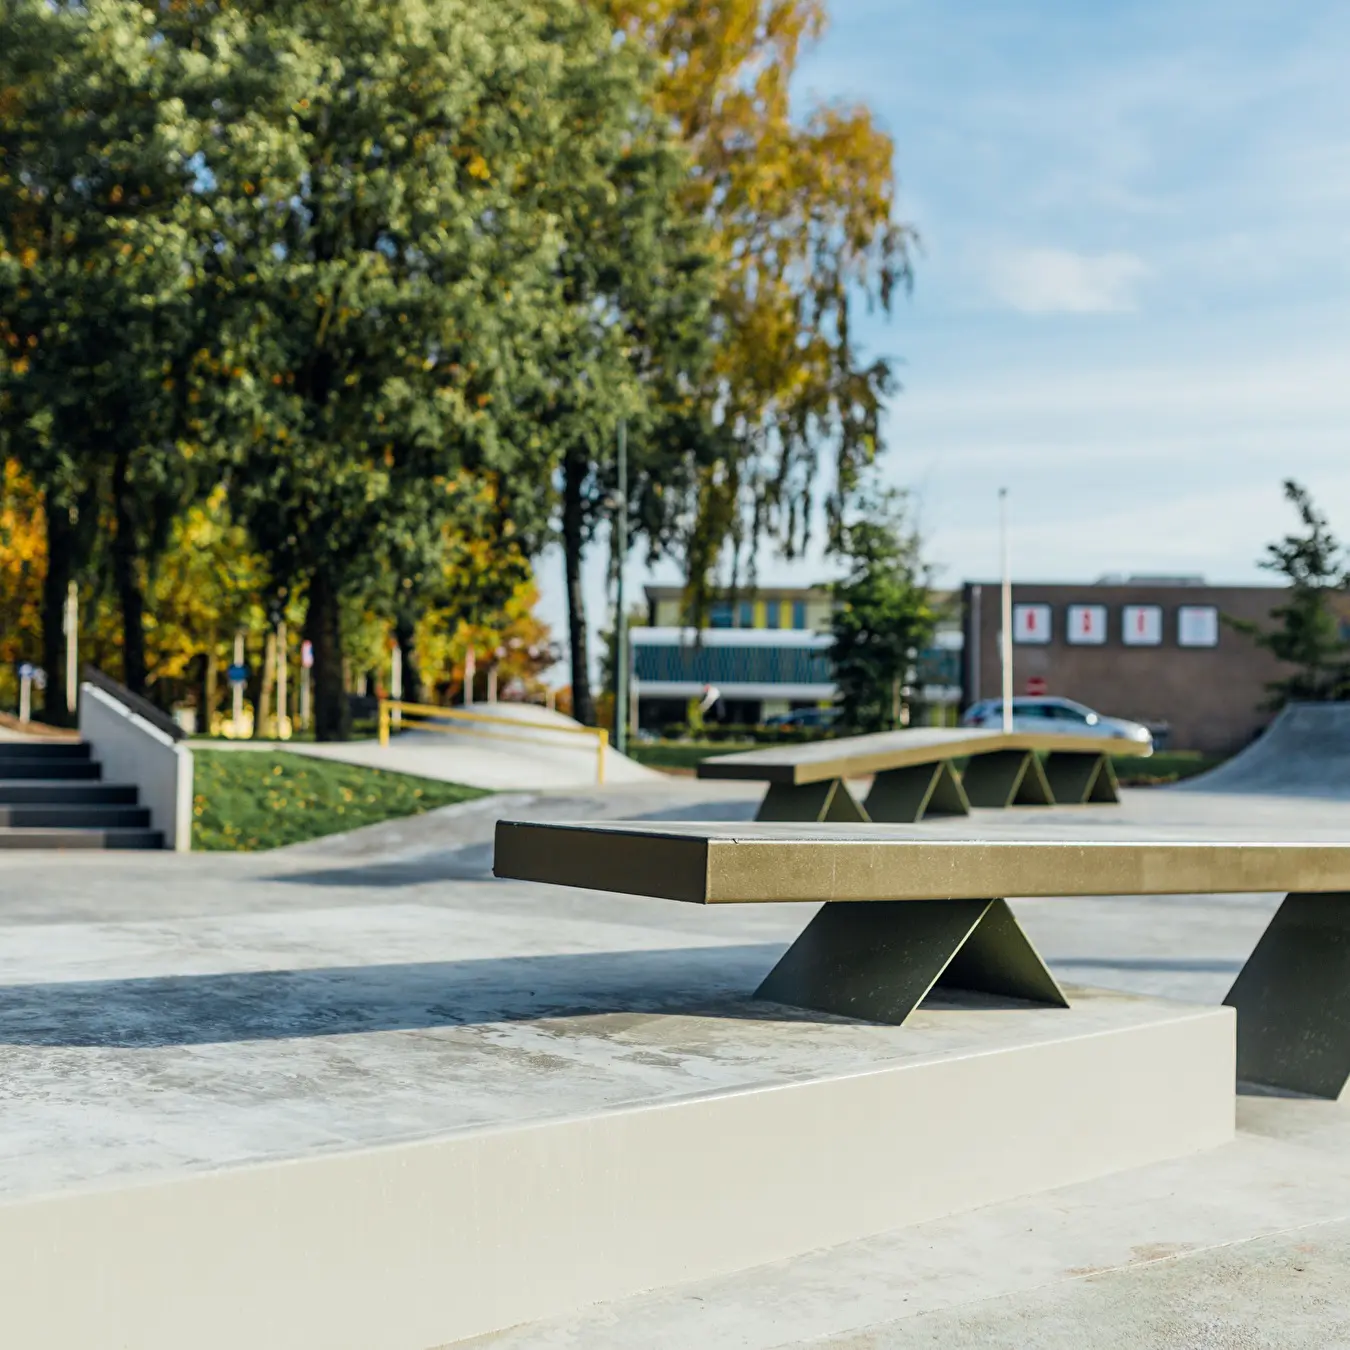 Nine Yards Etten Leur skatepark outdoor build